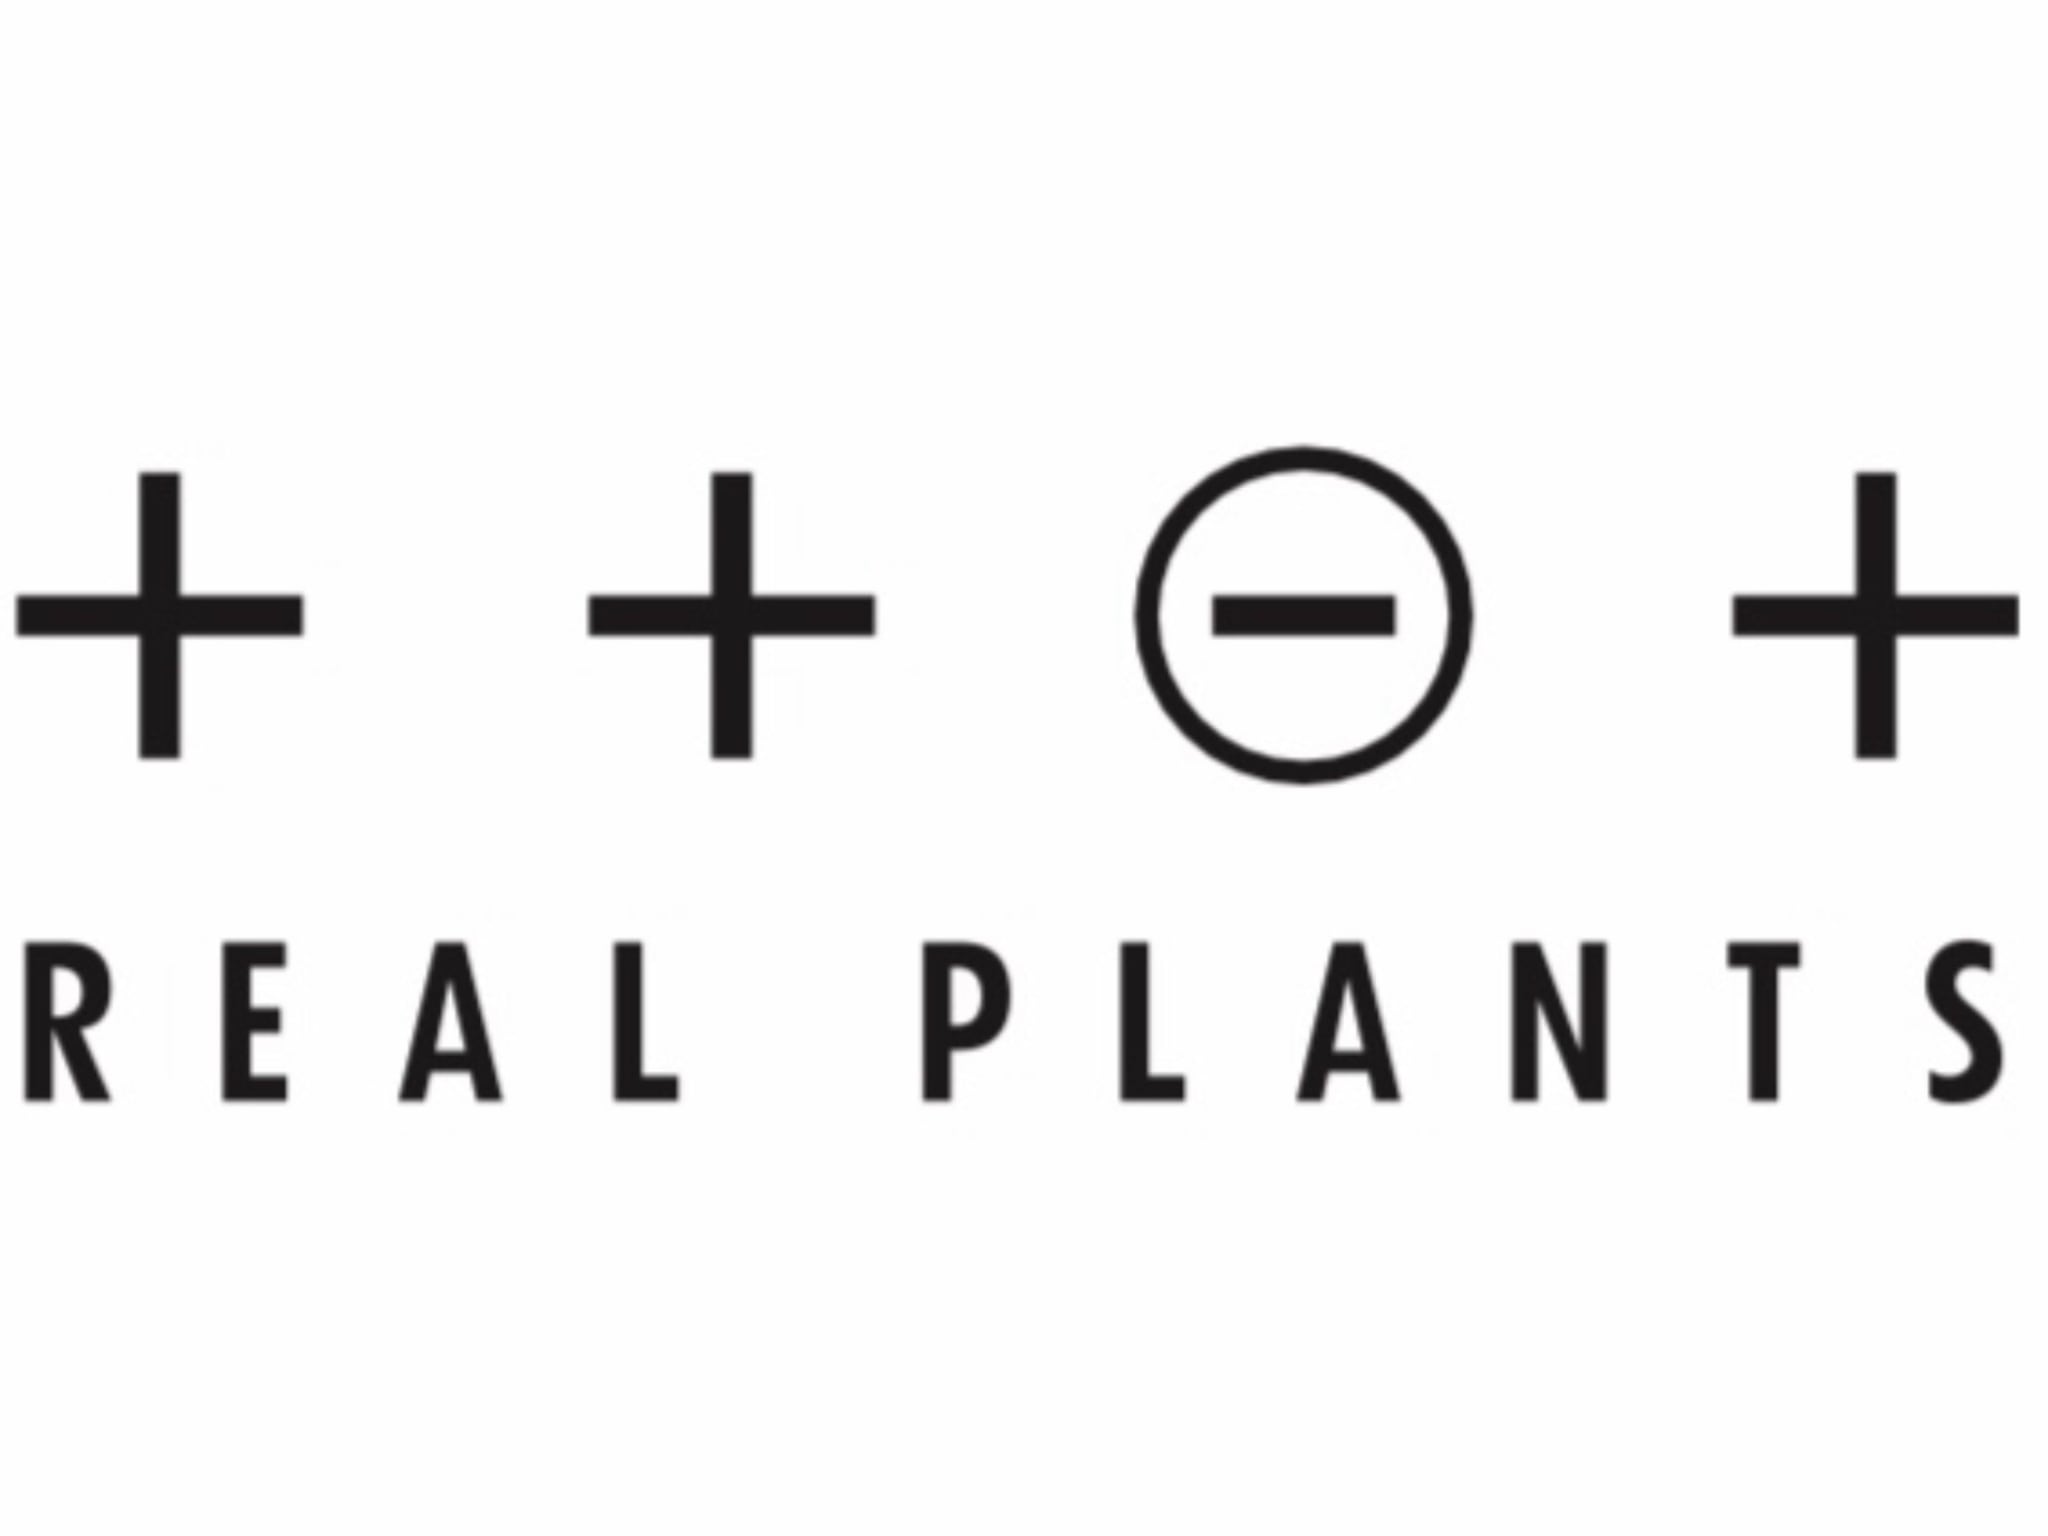 REAL PLANTS